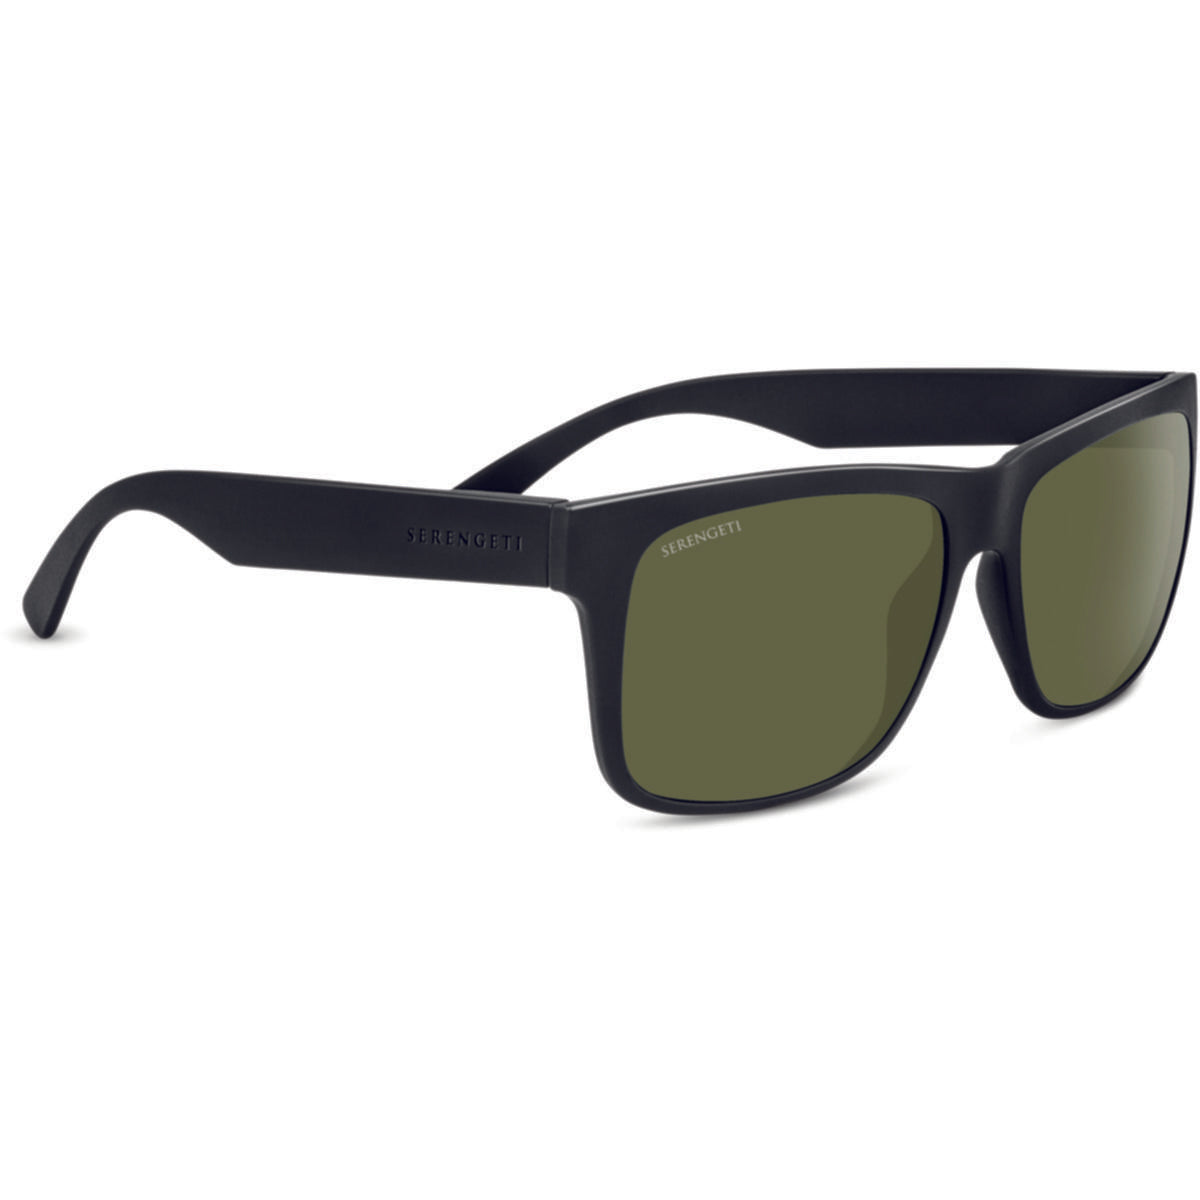 Serengeti Positano Sunglasses  Black Matte Medium-Large, Large